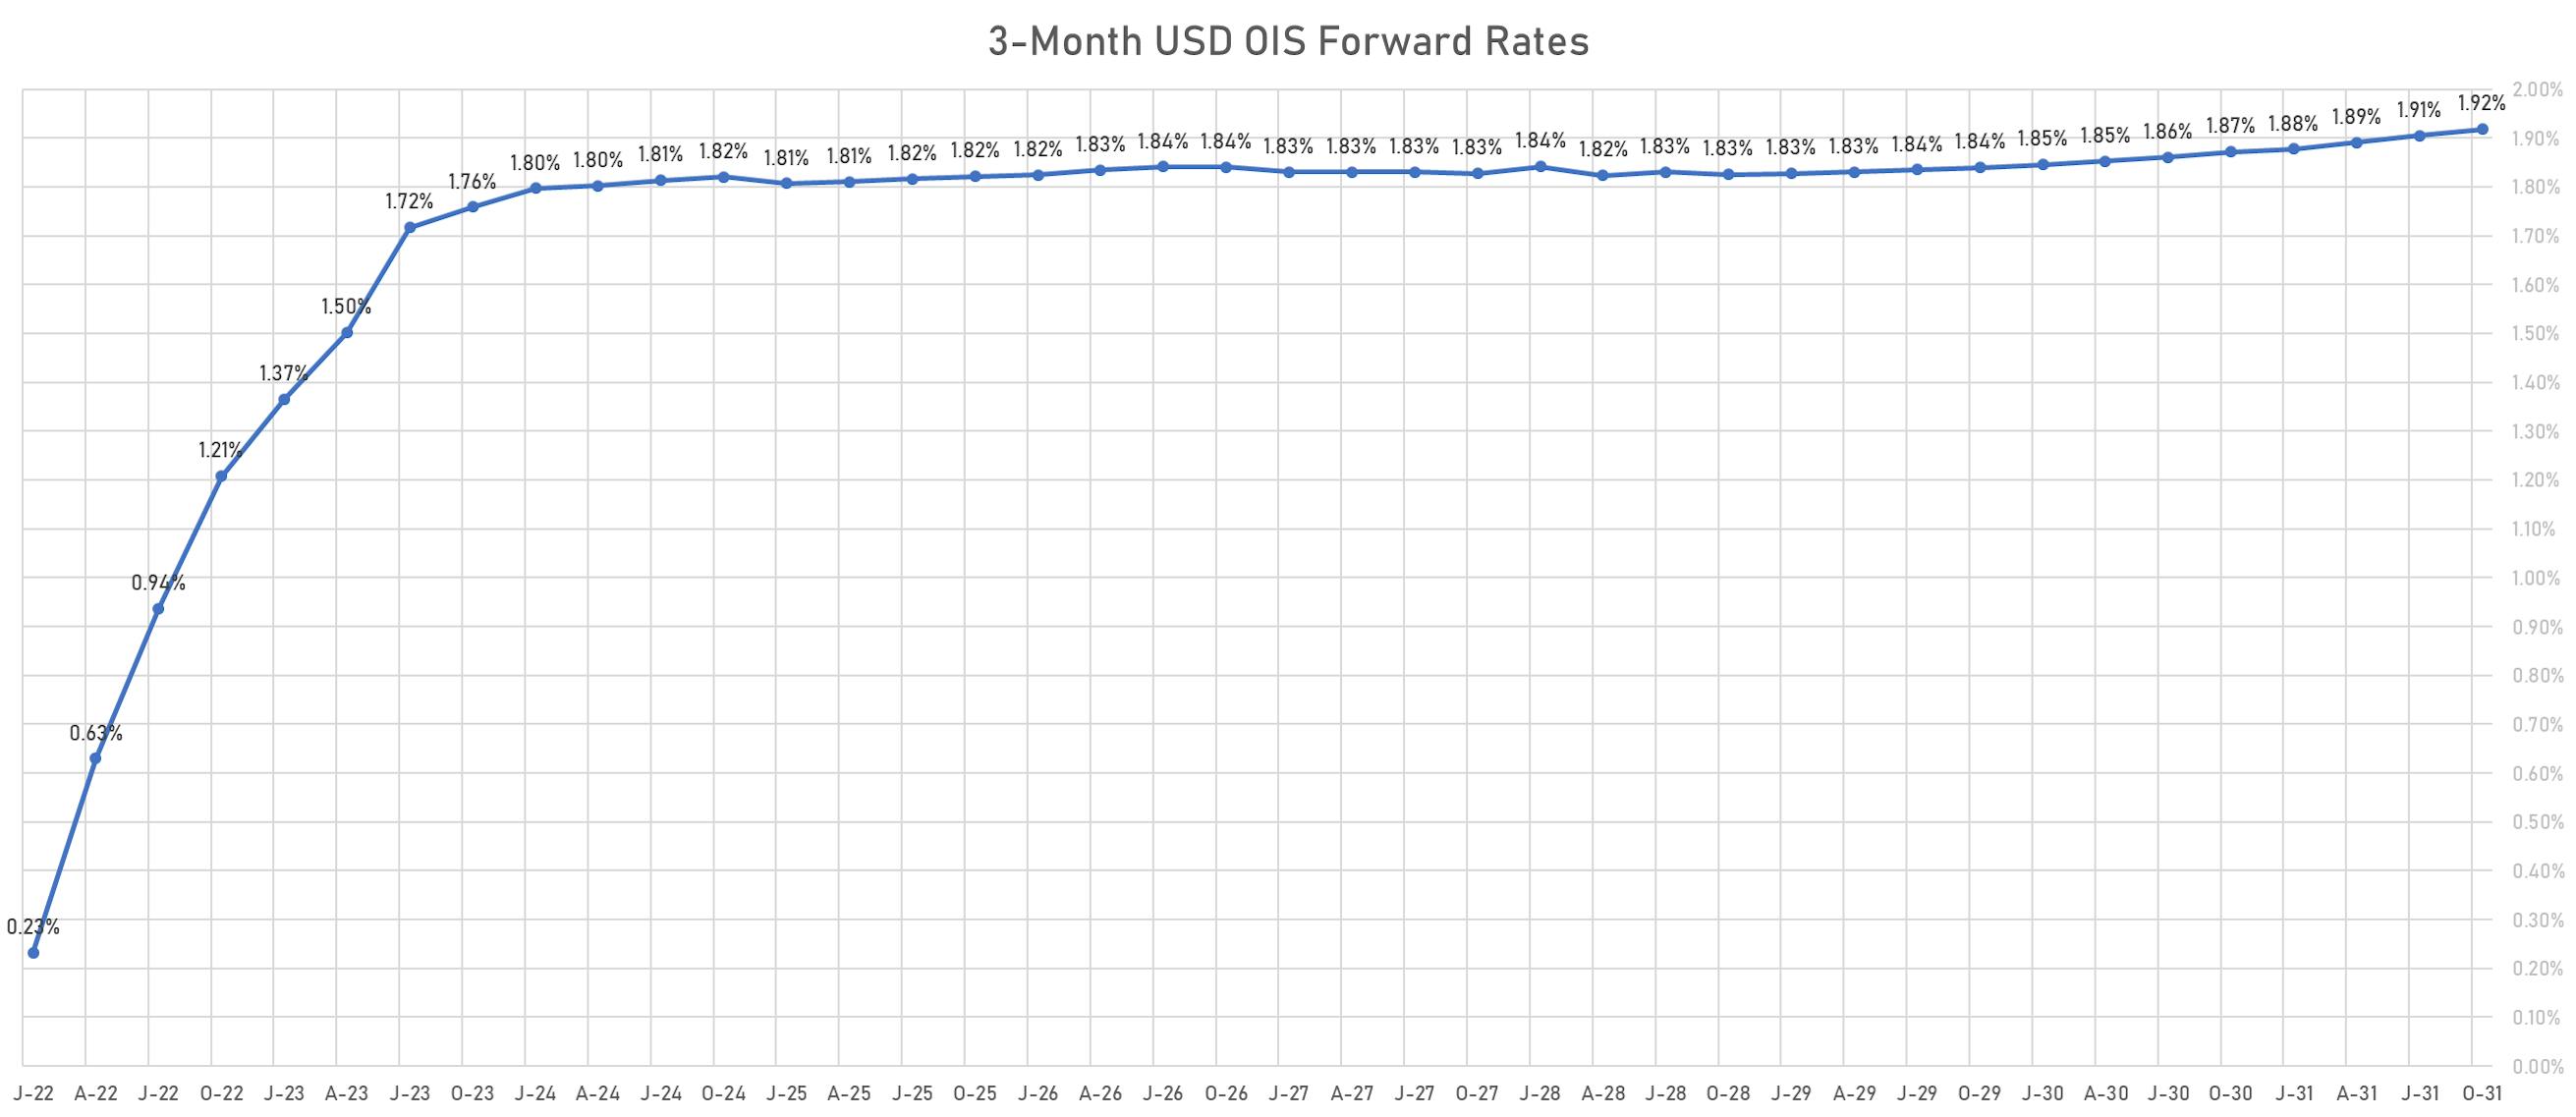 3M USD OIS Forward Curve | Sources: phipost.com, Refinitiv data